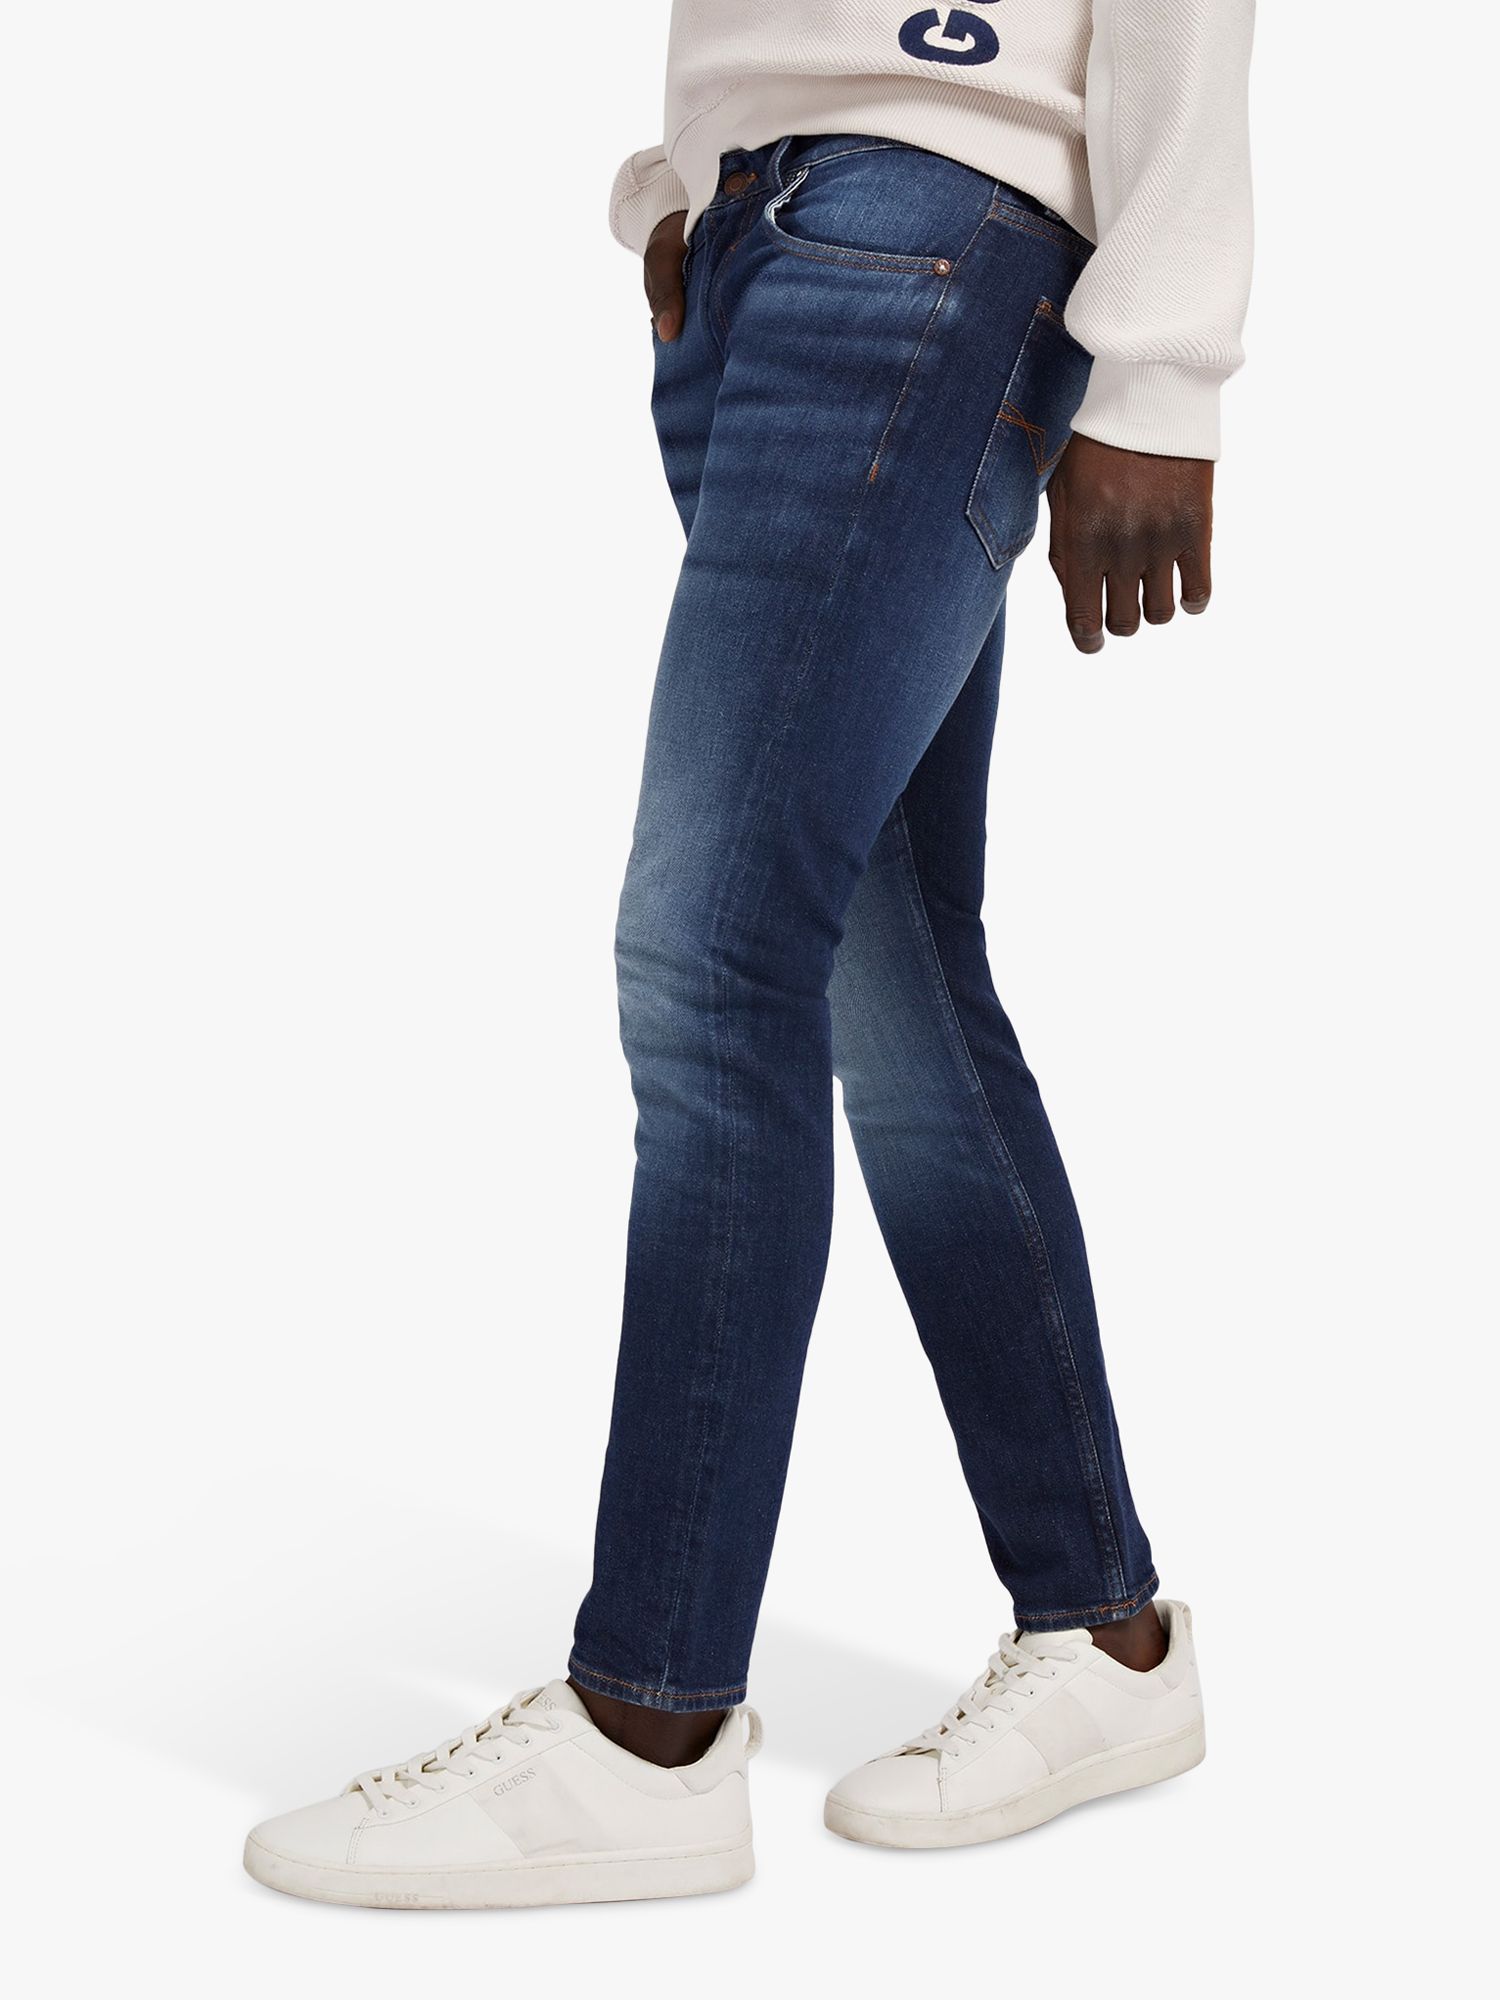 GUESS Miami Skinny Fit Jeans, Carry Dark., W36/L34